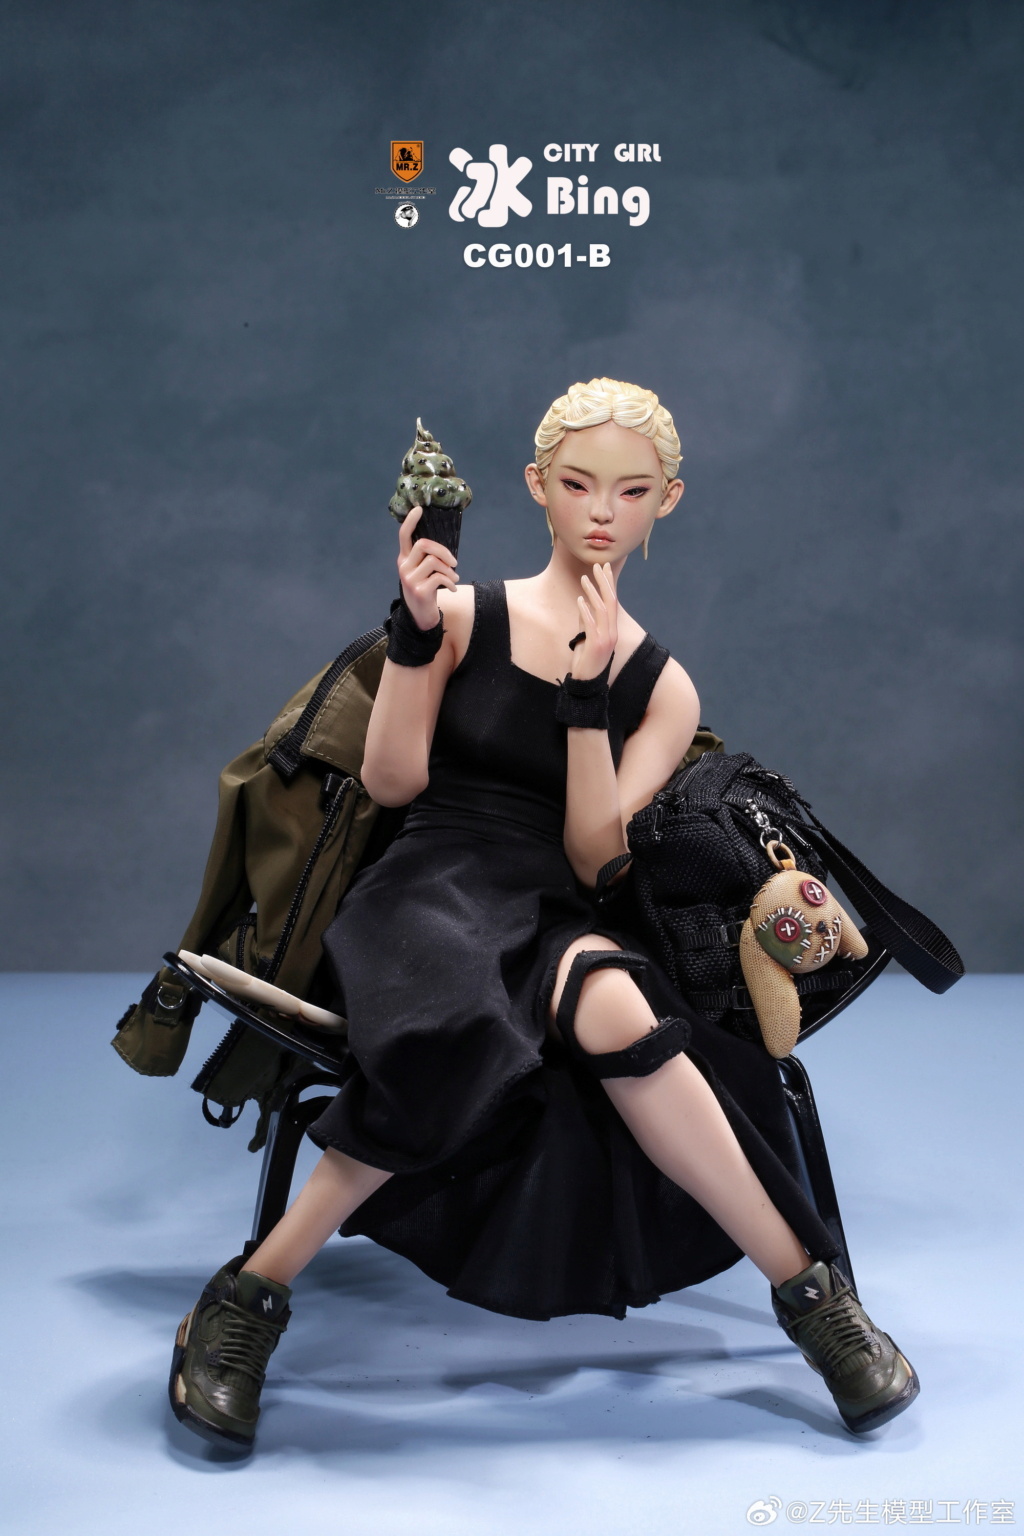 NEW PRODUCT: Mr.Z model studio - city series first urban girl Mu & Bing #CG001-A/B 6b270b29